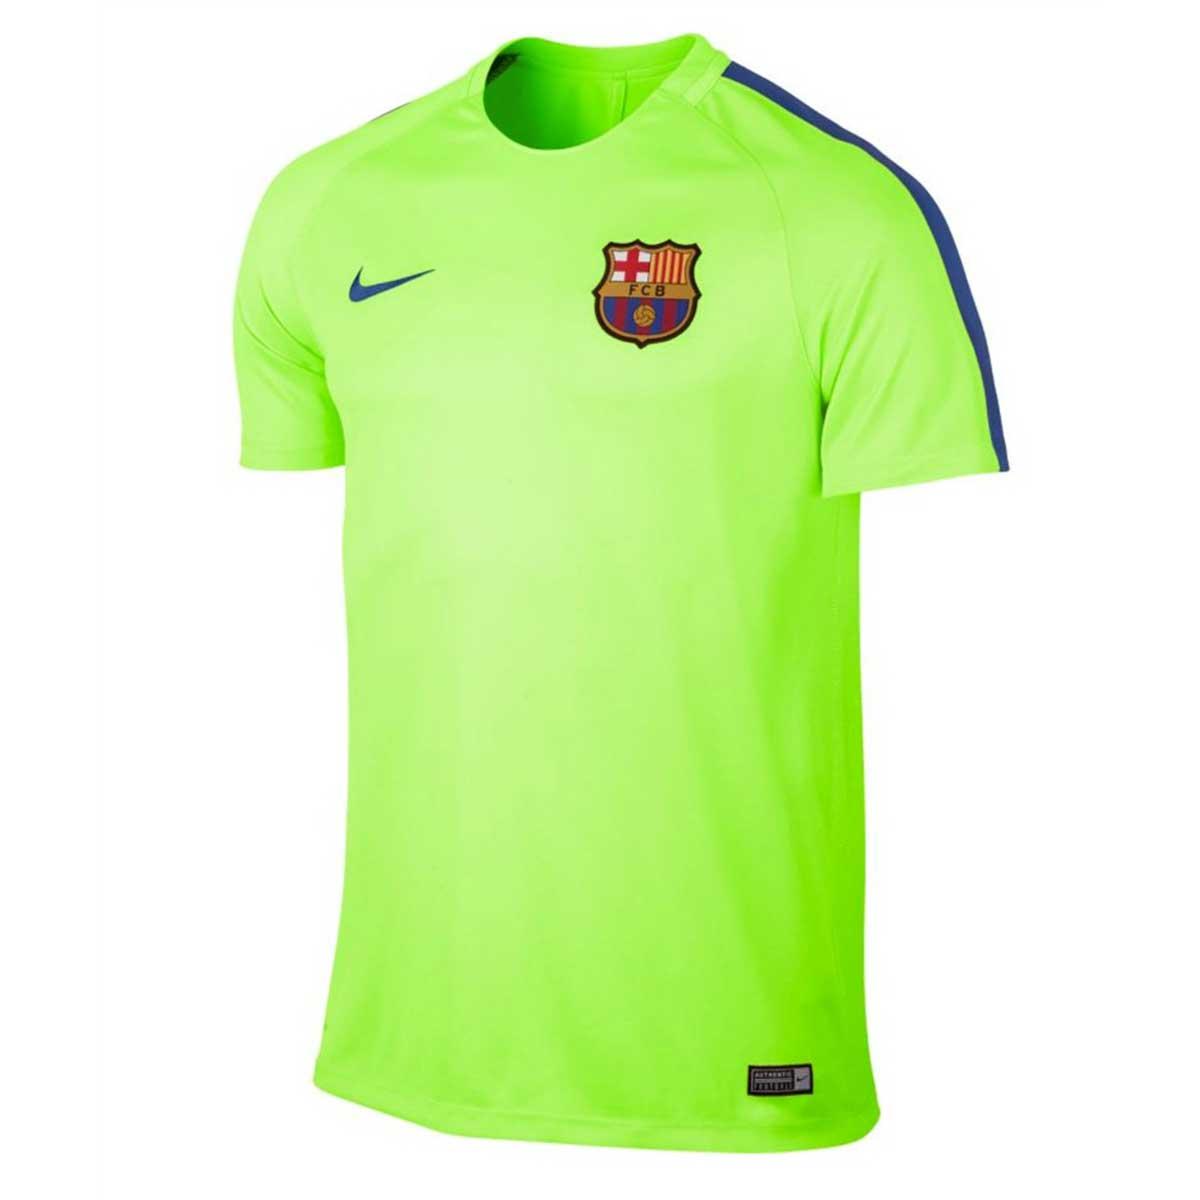 Buy Nike FC Barcelona Jersey (Green) Online India